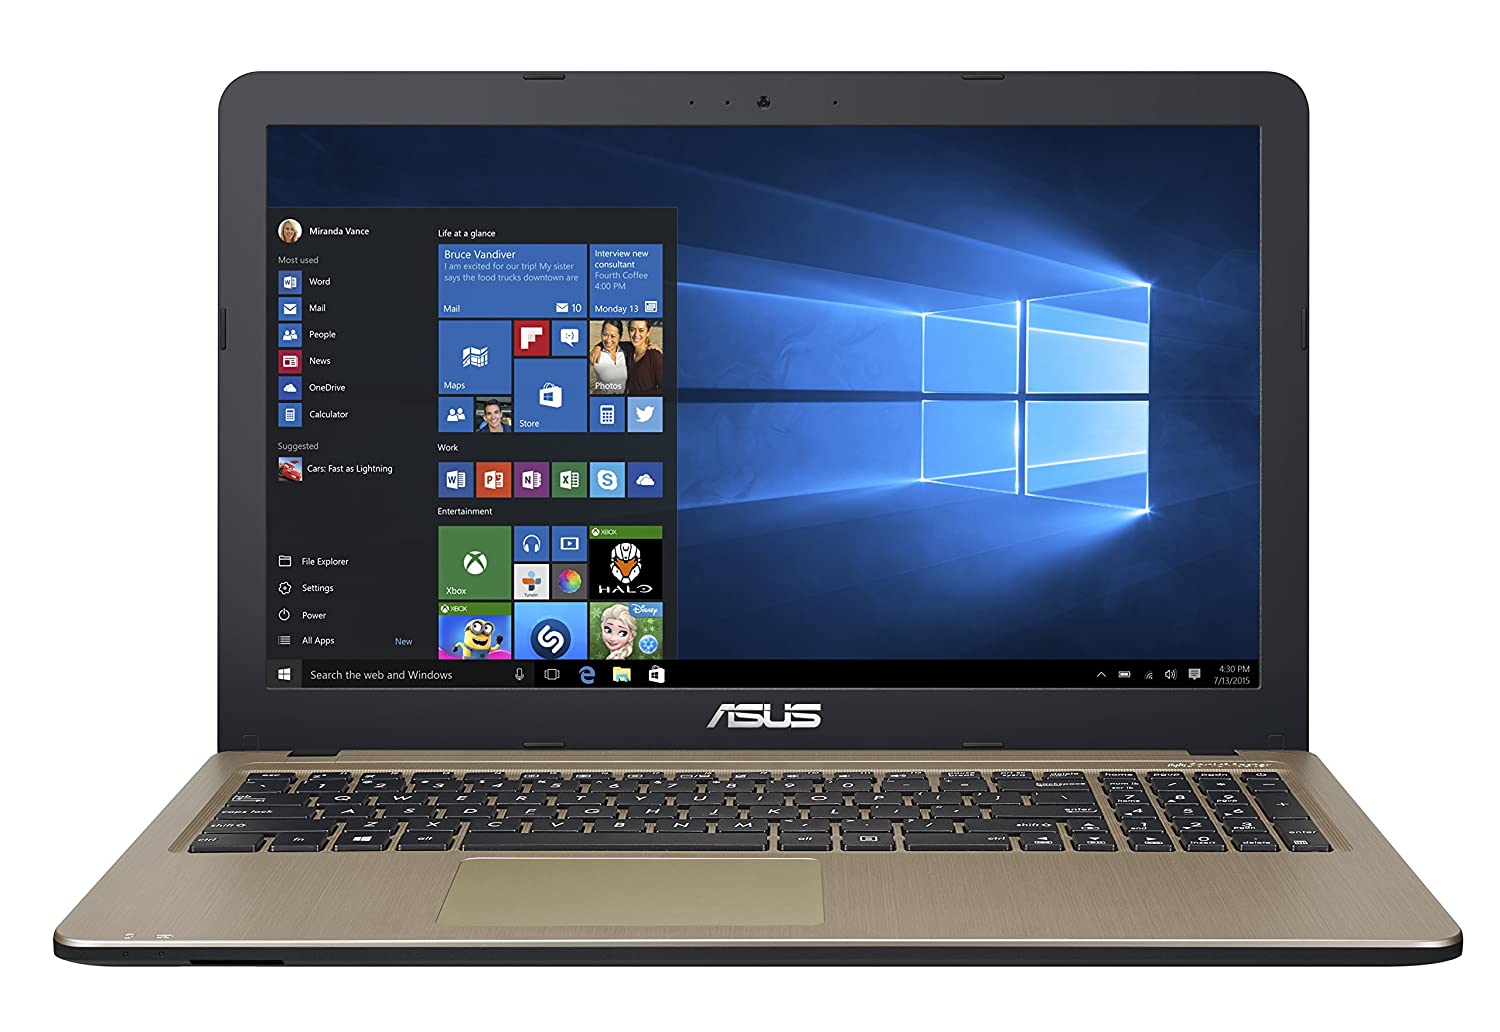 ASUS VivoBook 15 Intel Celeron N3350 15.6 inches HD Laptop